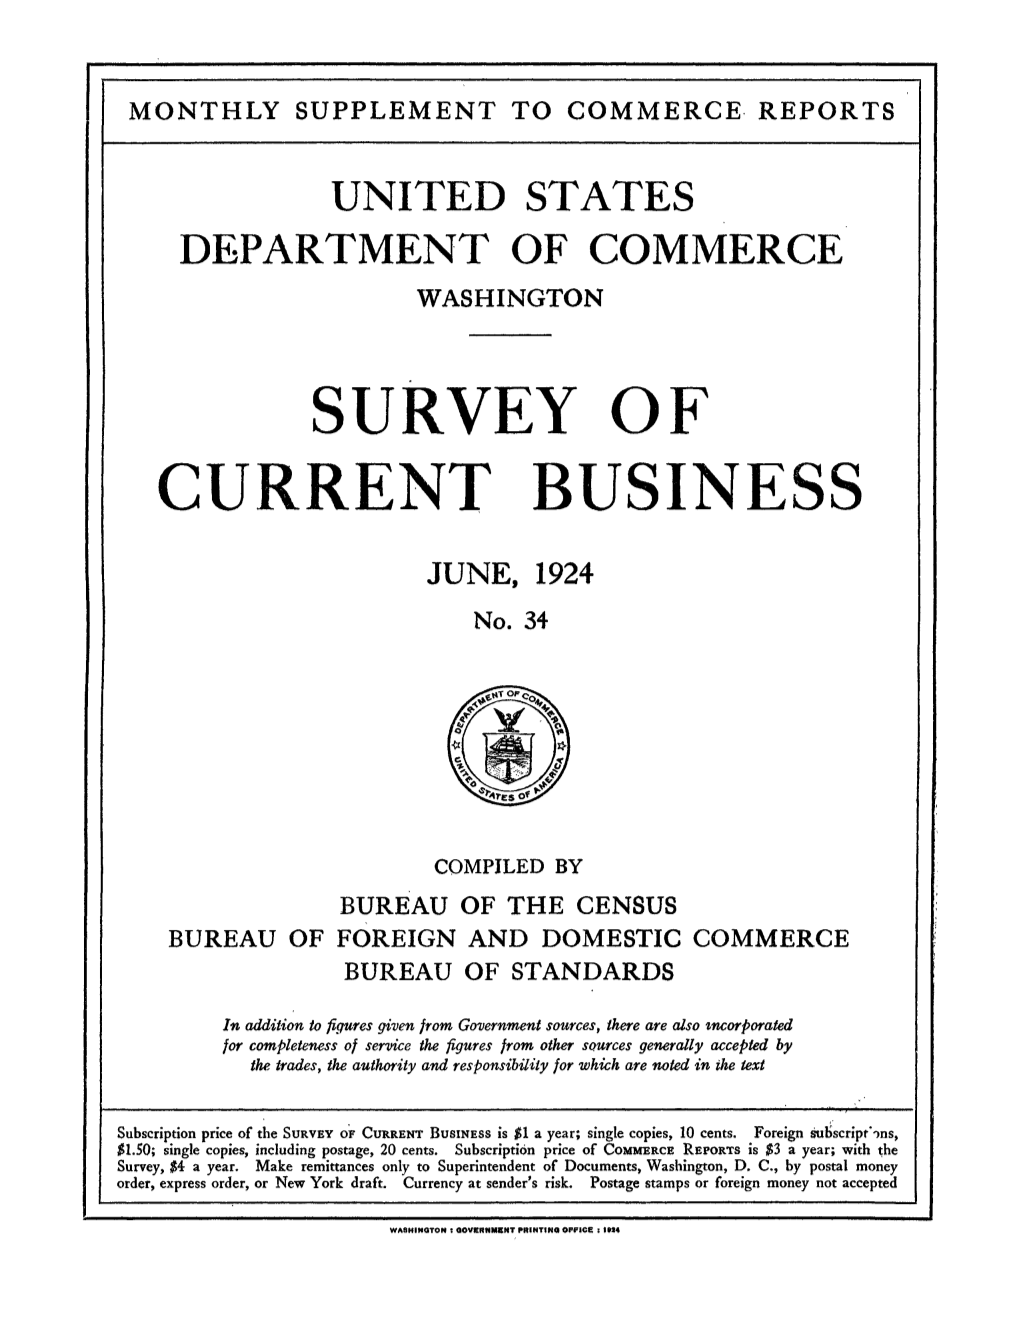 Survey of Current Business June 1924